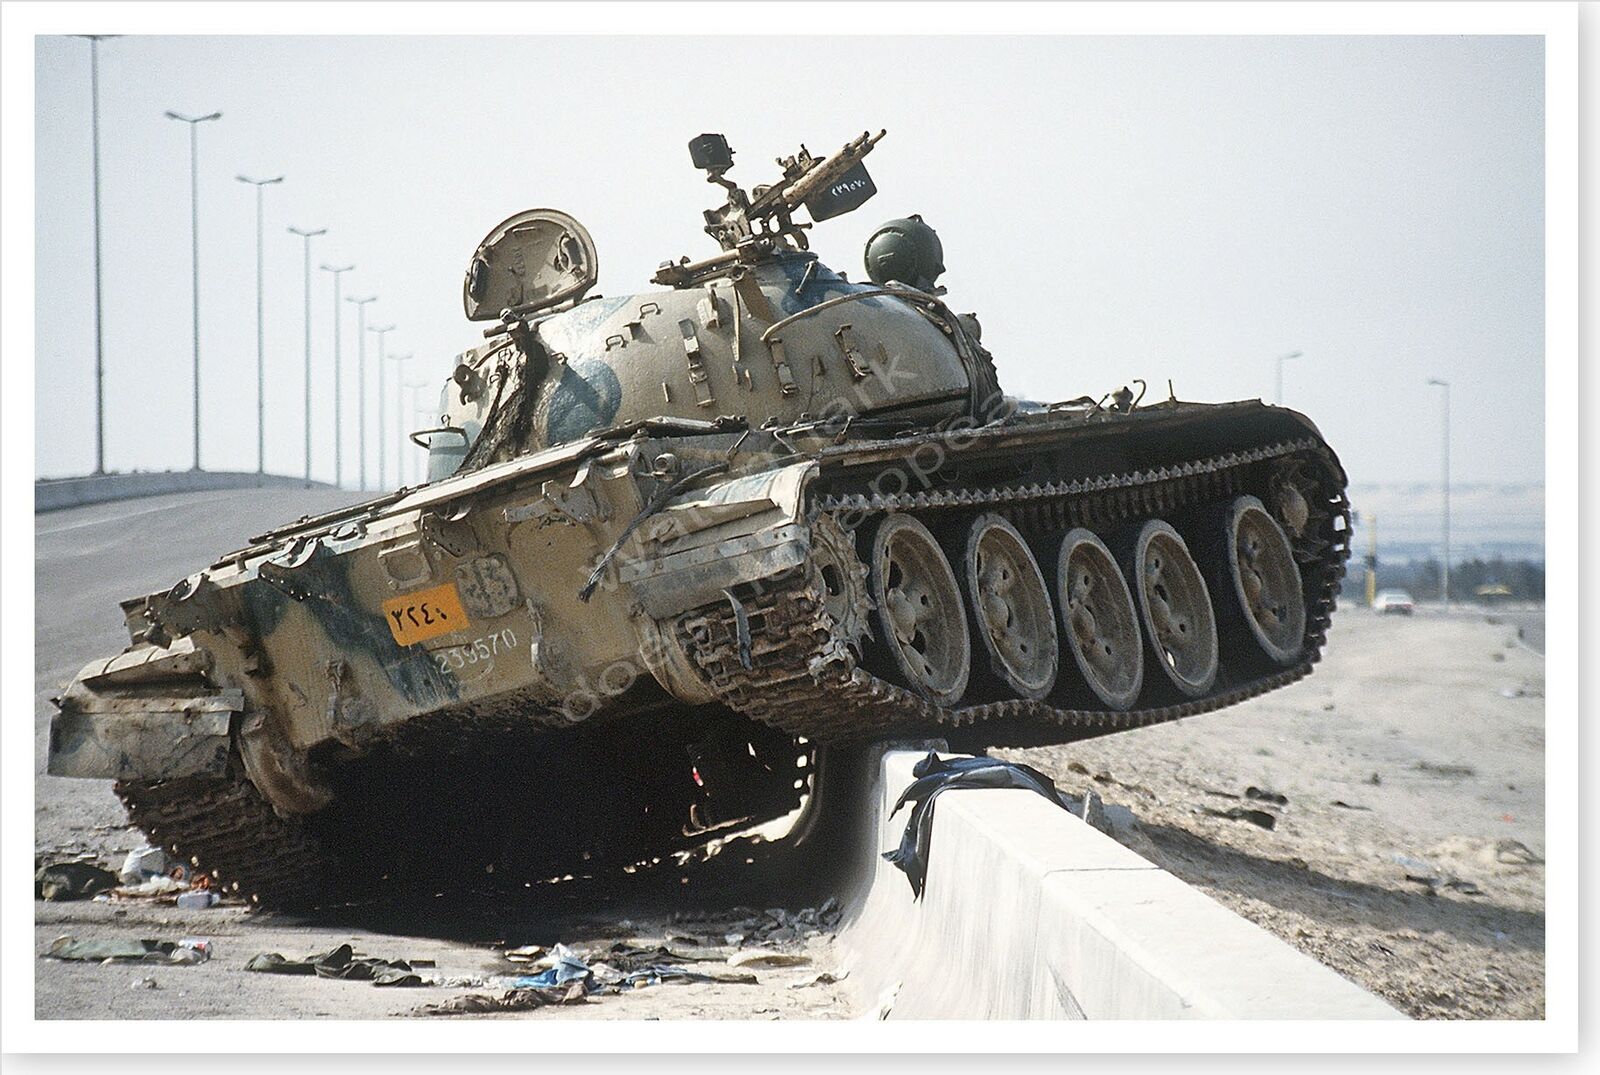 Destroyed Iraqi T-55 Main Battle Tank In Kuwait Desert Storm 8 x 12 Photo